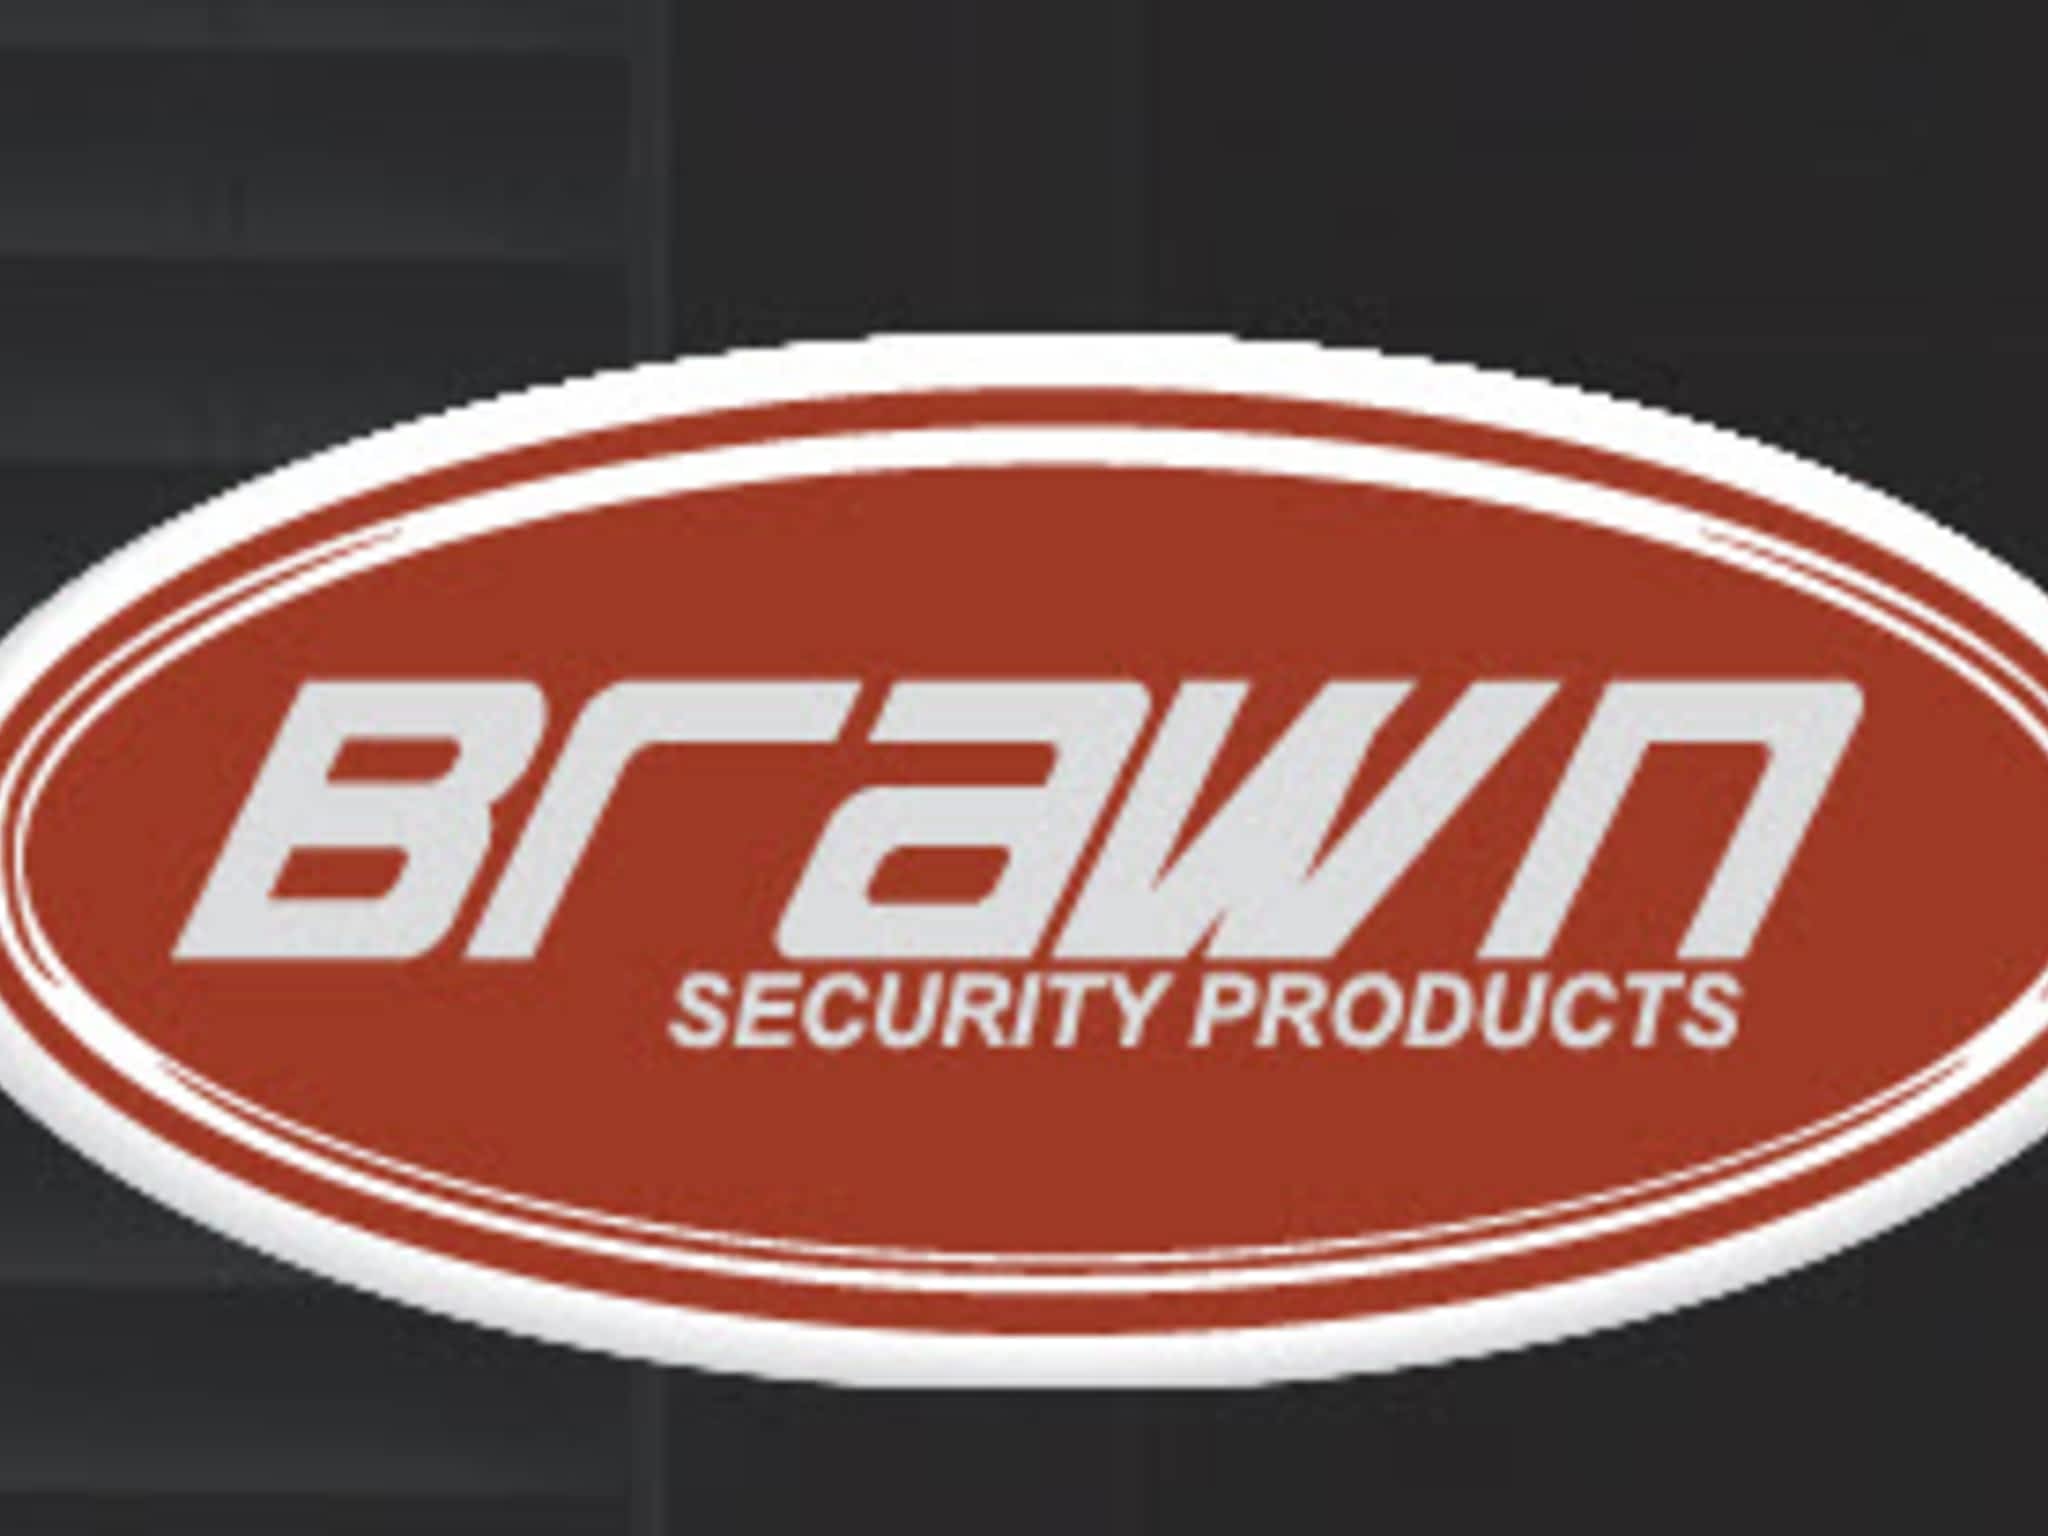 photo Brawn Security Products Ltd